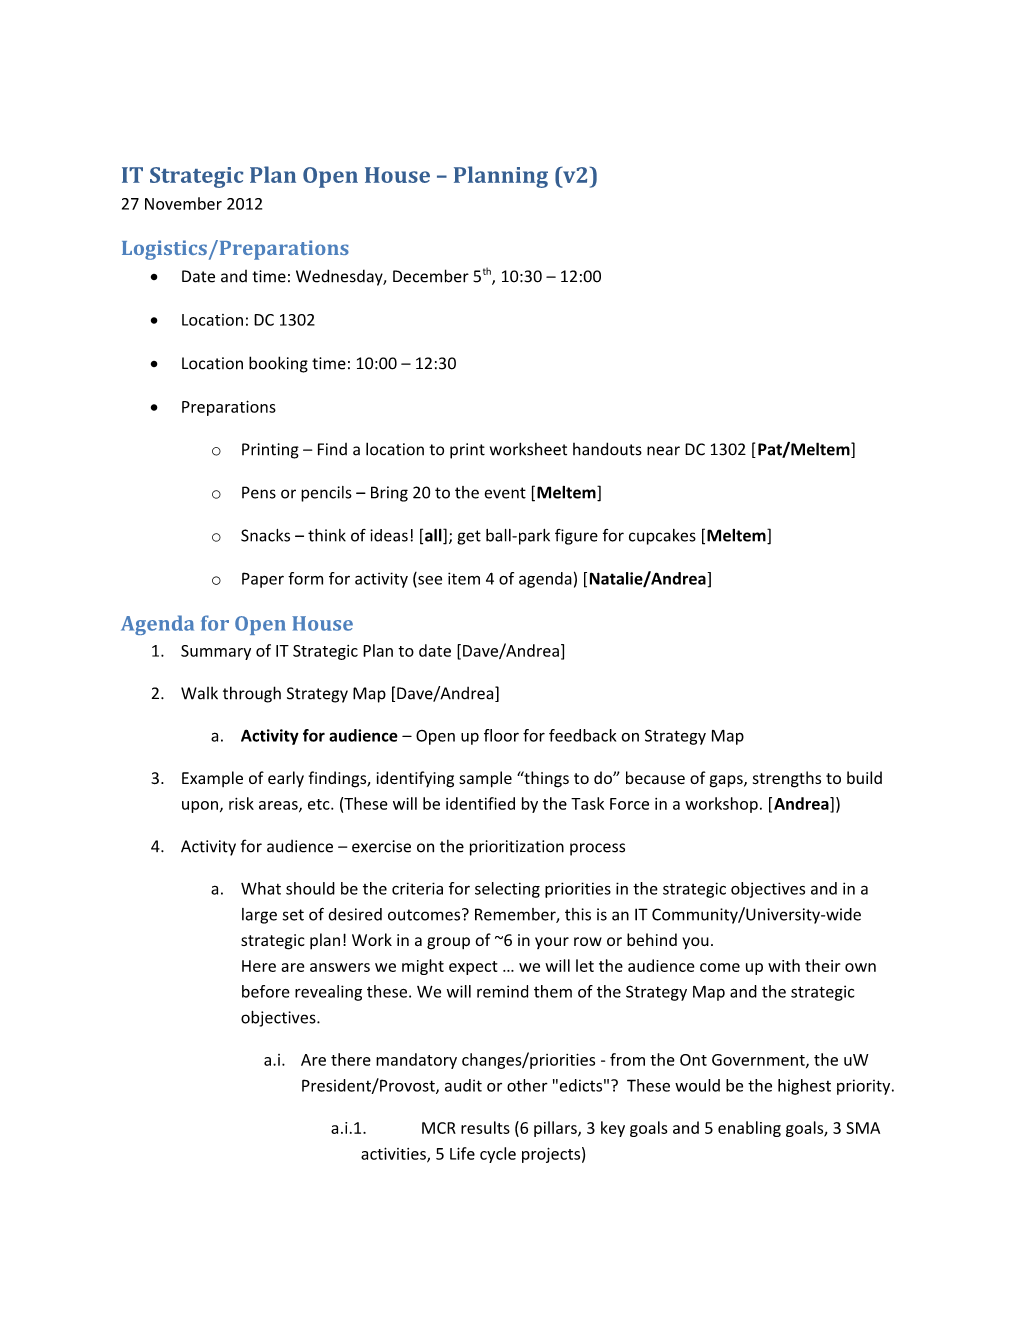 IT Strategic Plan Open House Planning (V2)